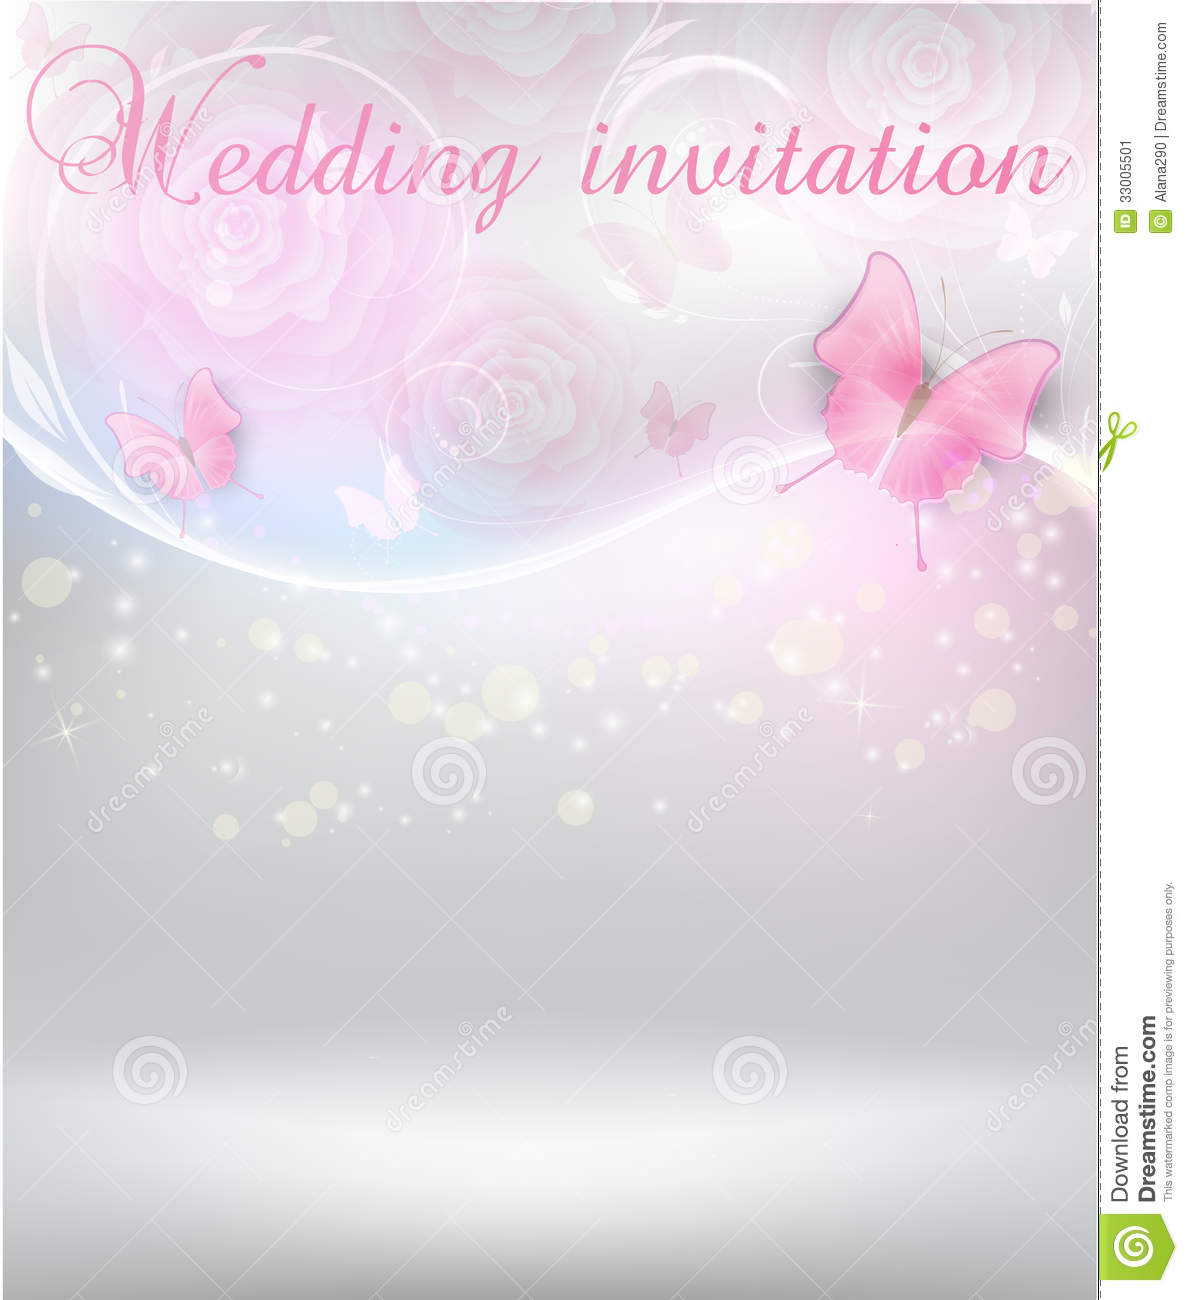 Wedding Invitation Background Image All HD Wallpaper